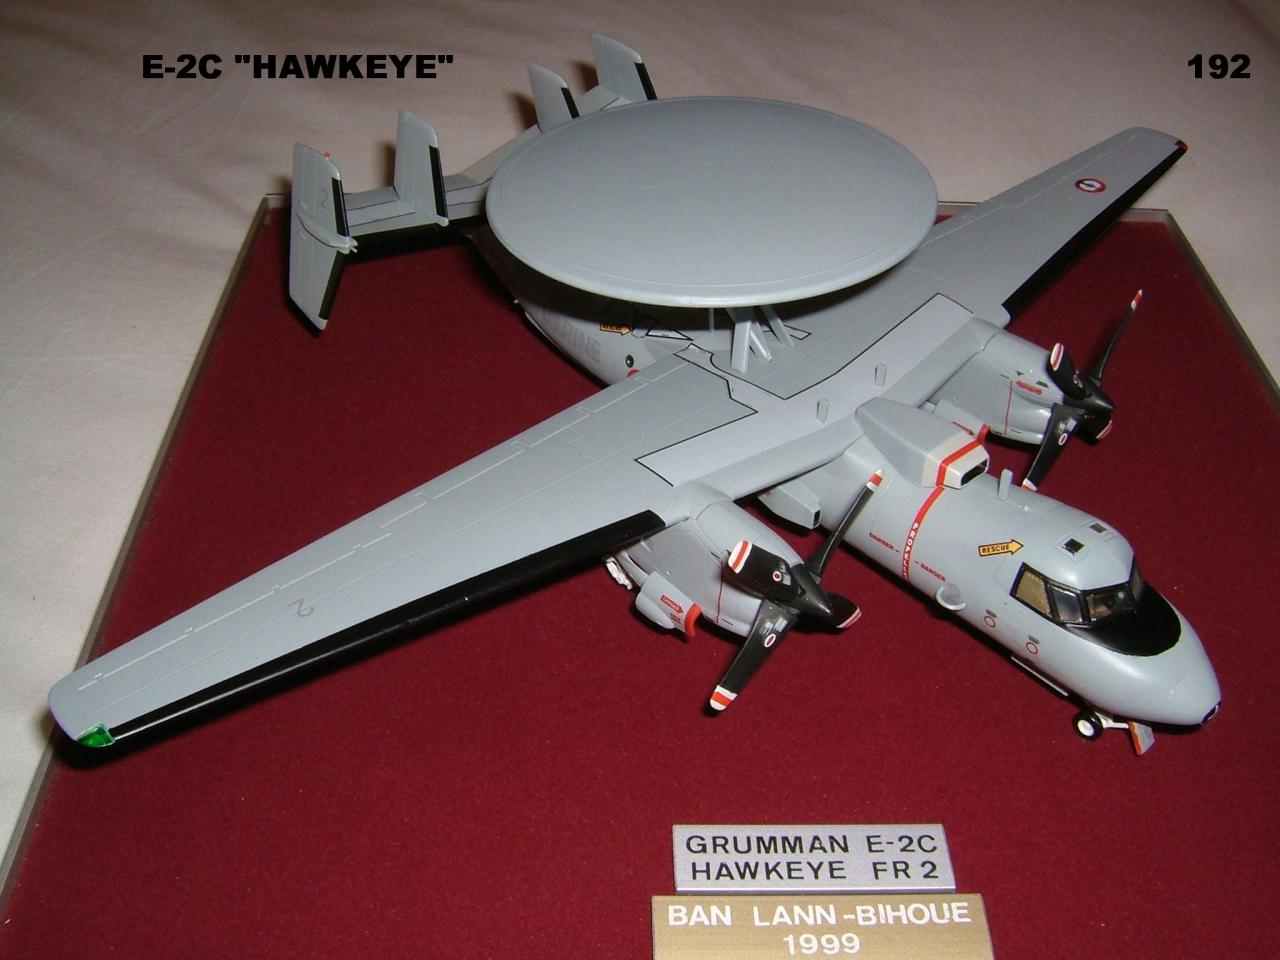 E-2C HAWKEYE